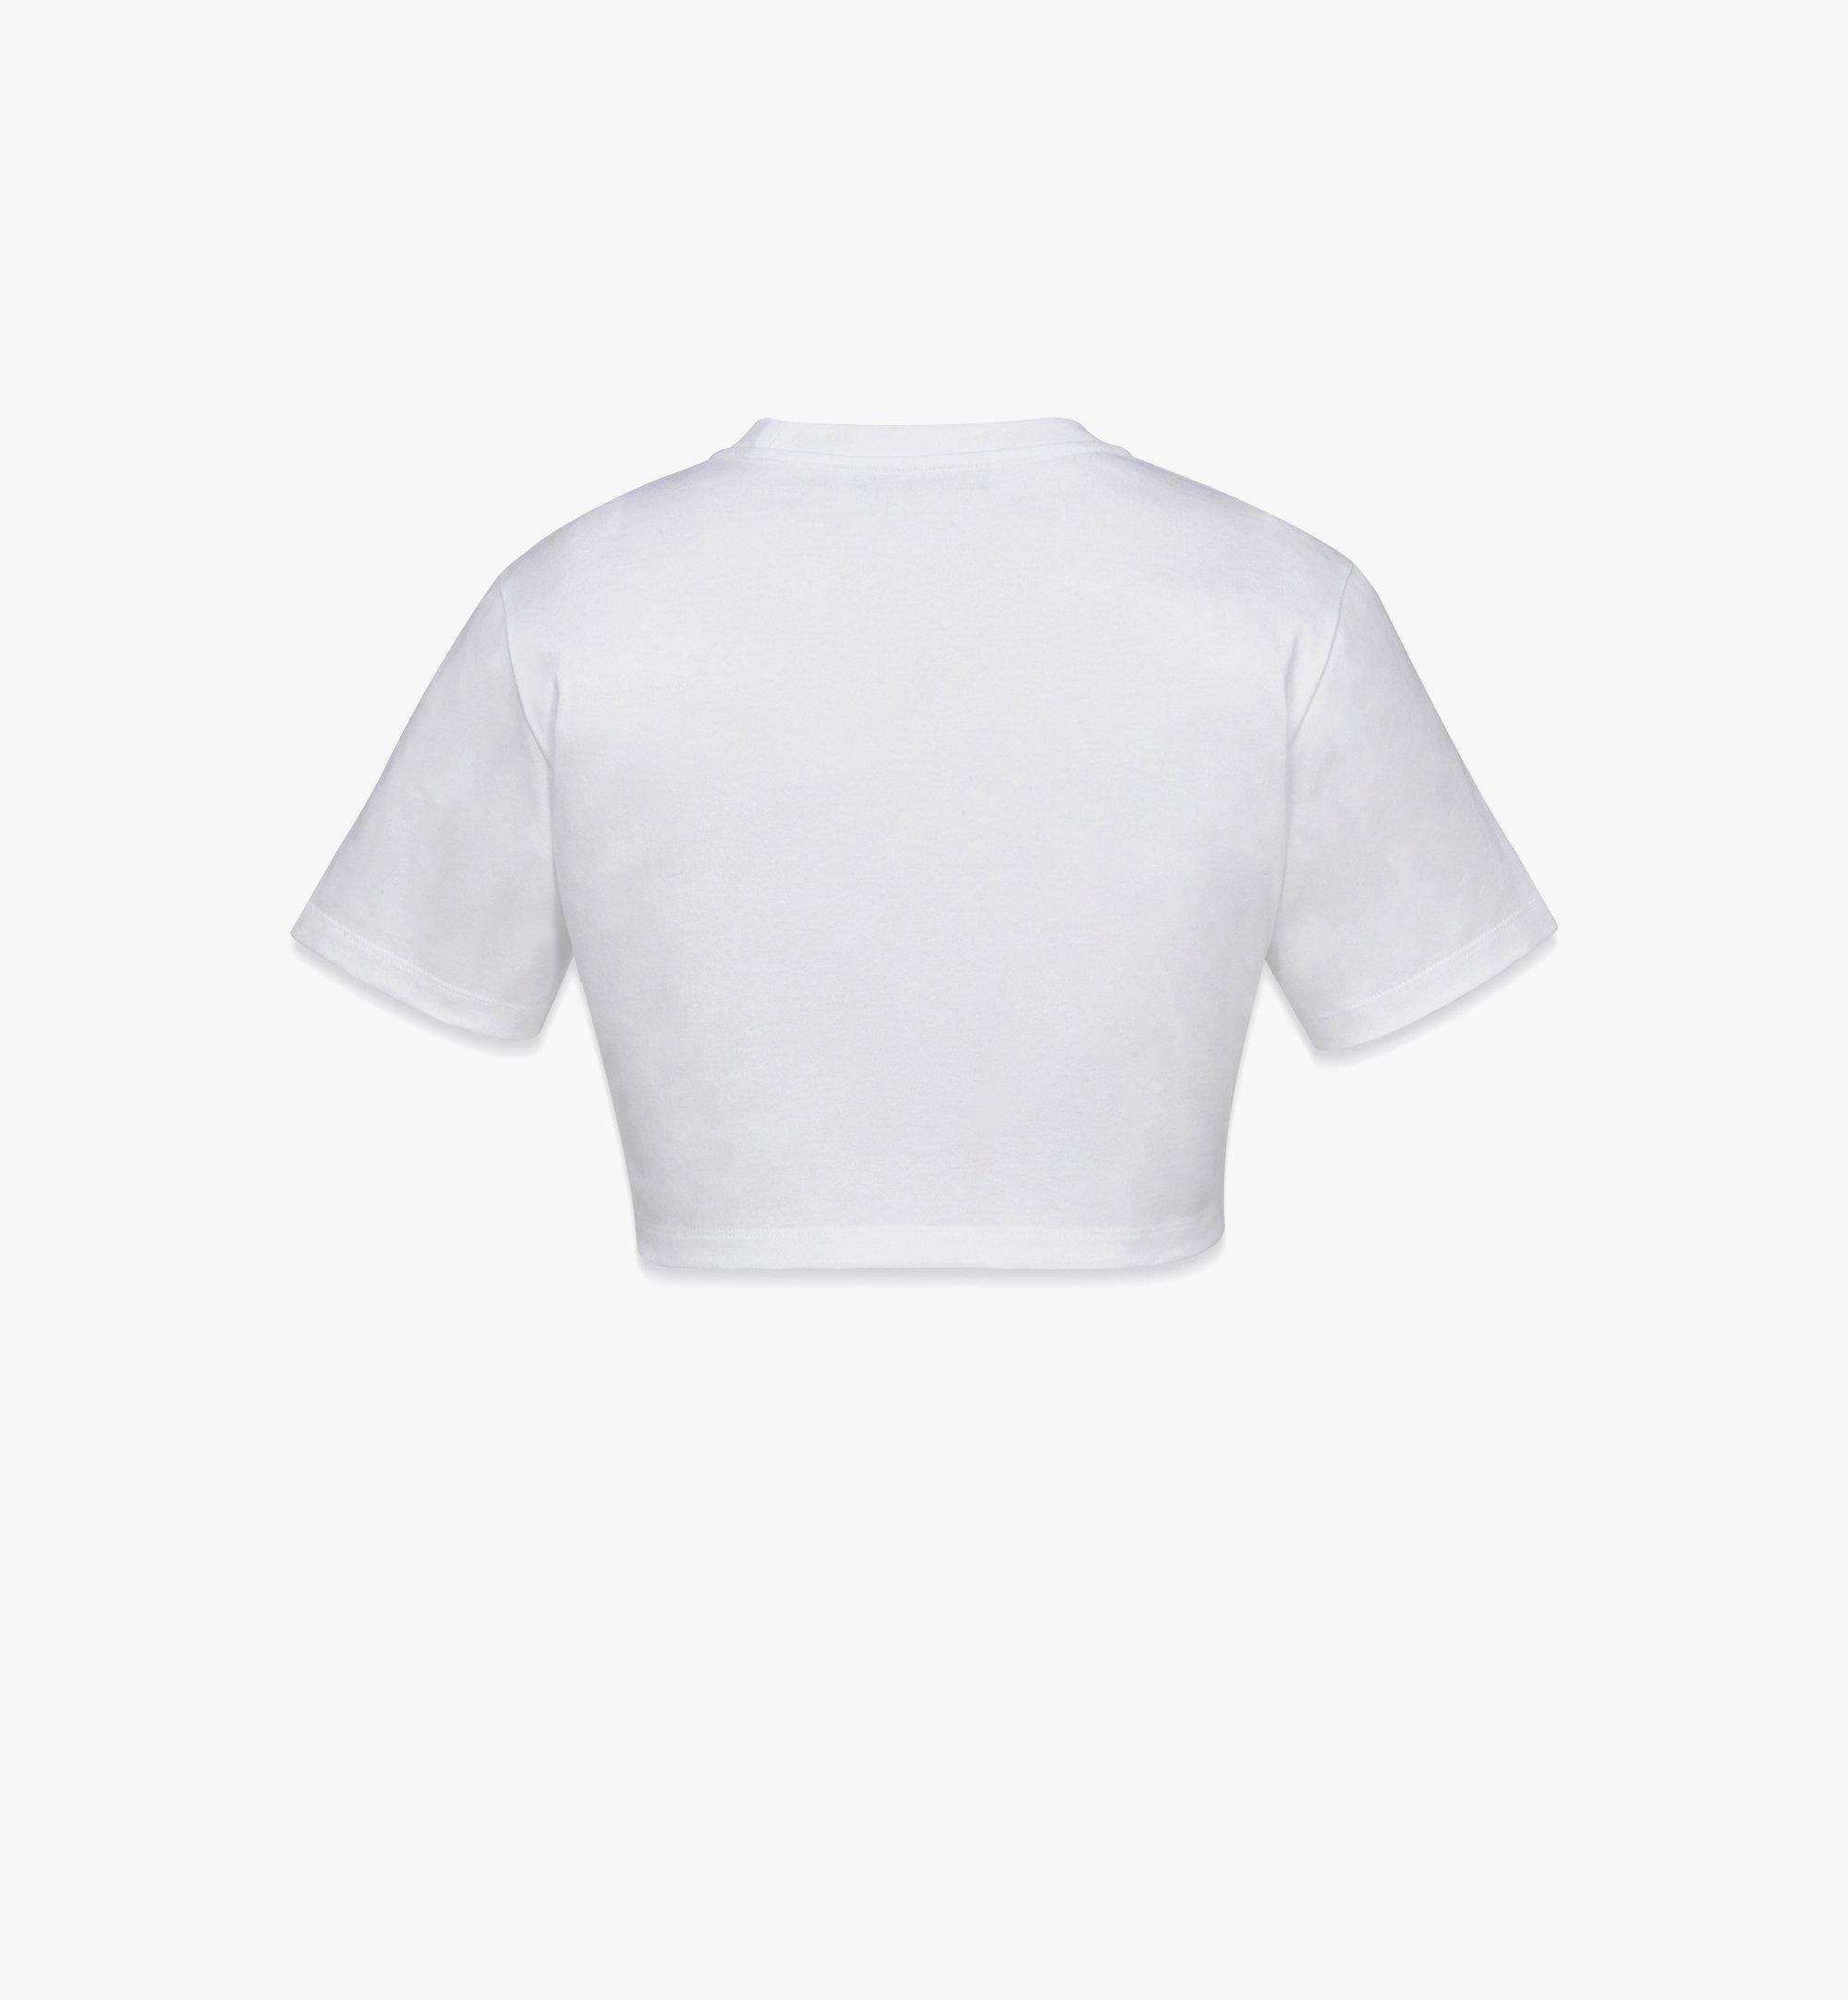 Large MCM Worldwide Print Cropped T-Shirt in Organic Cotton White | MCM ®US